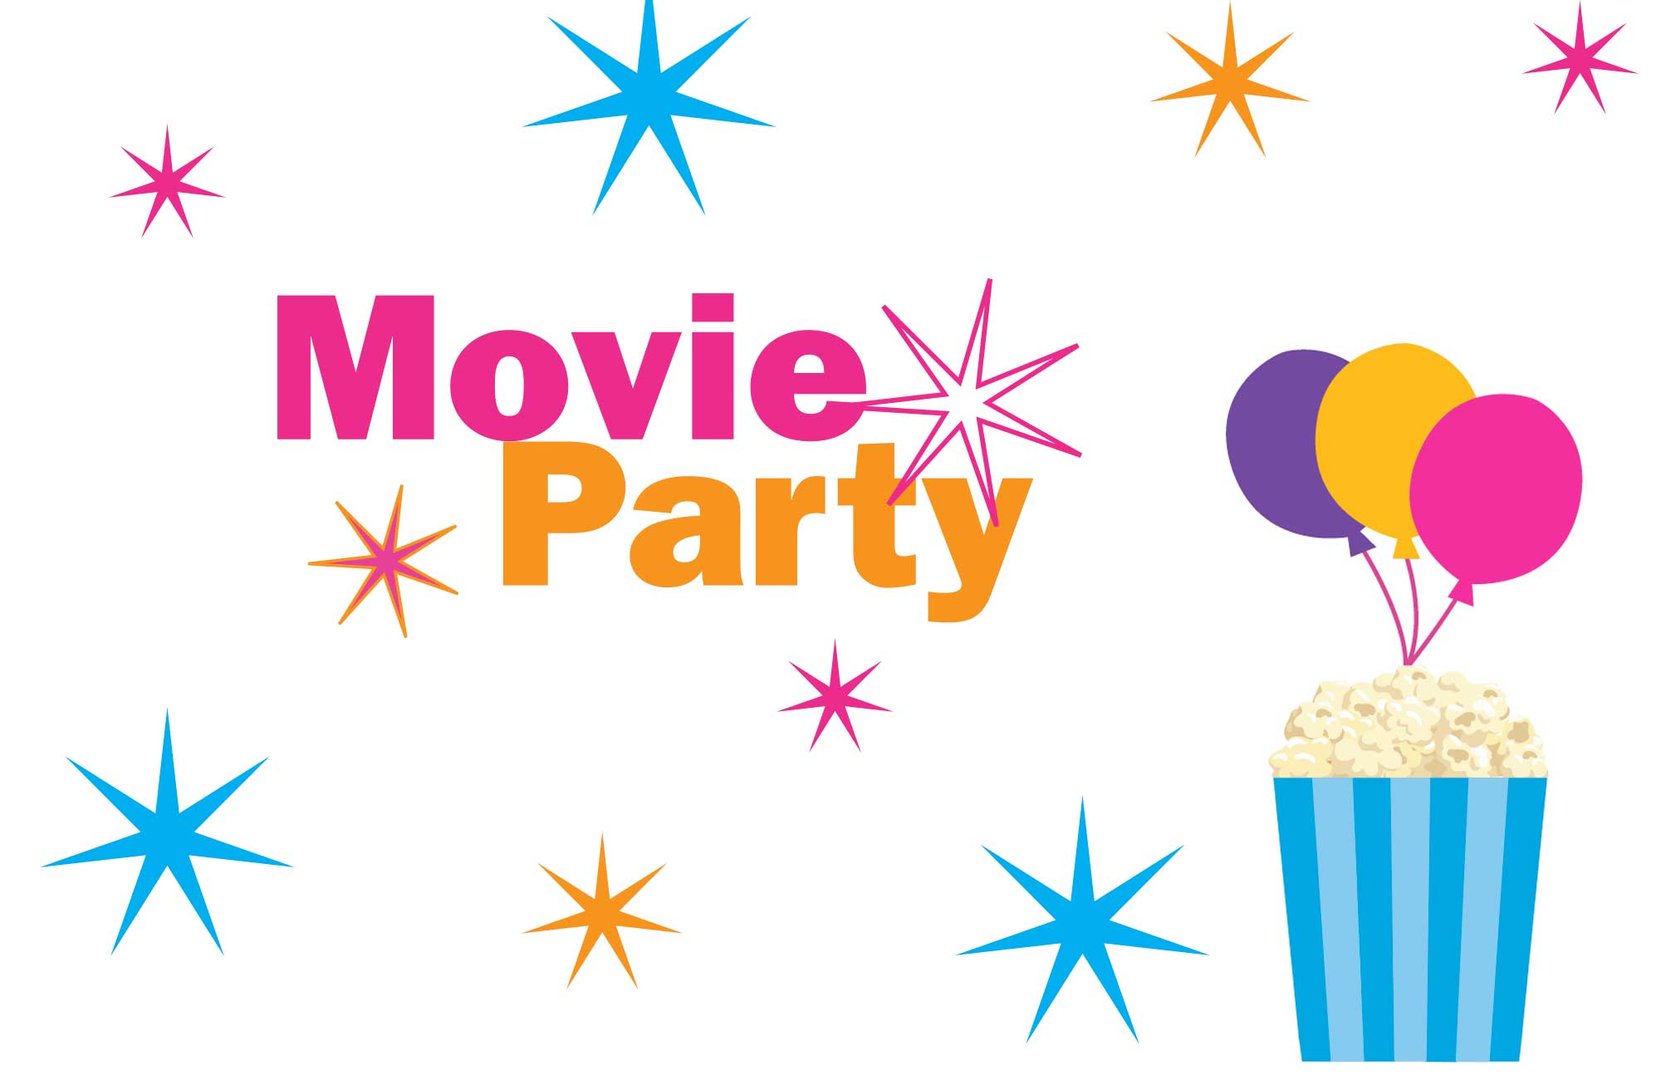 Movie Party Invite